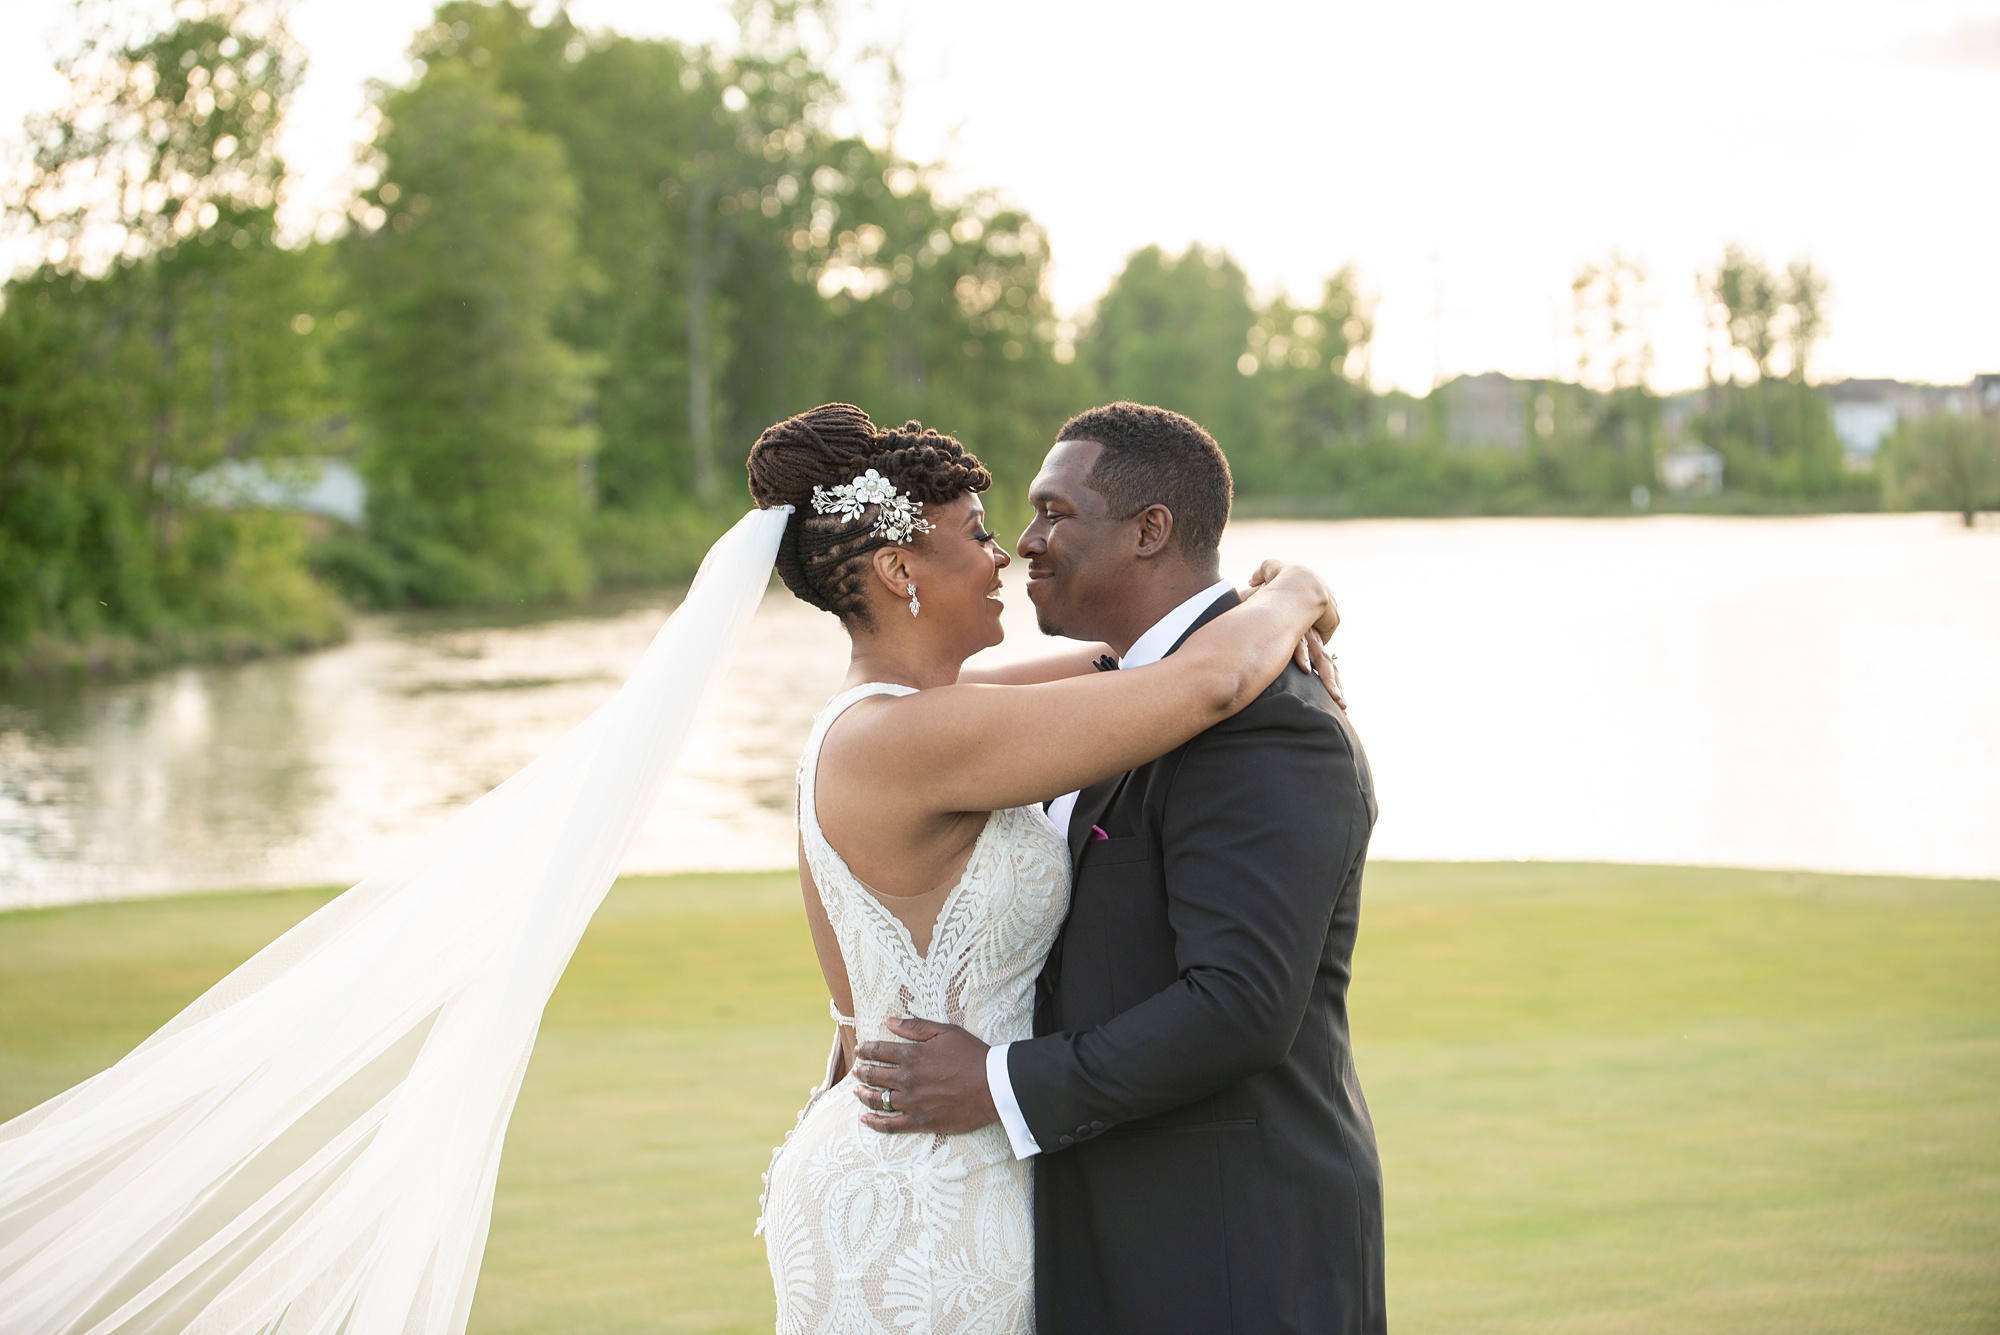 bride and groom hug on golf course during wedding photos 